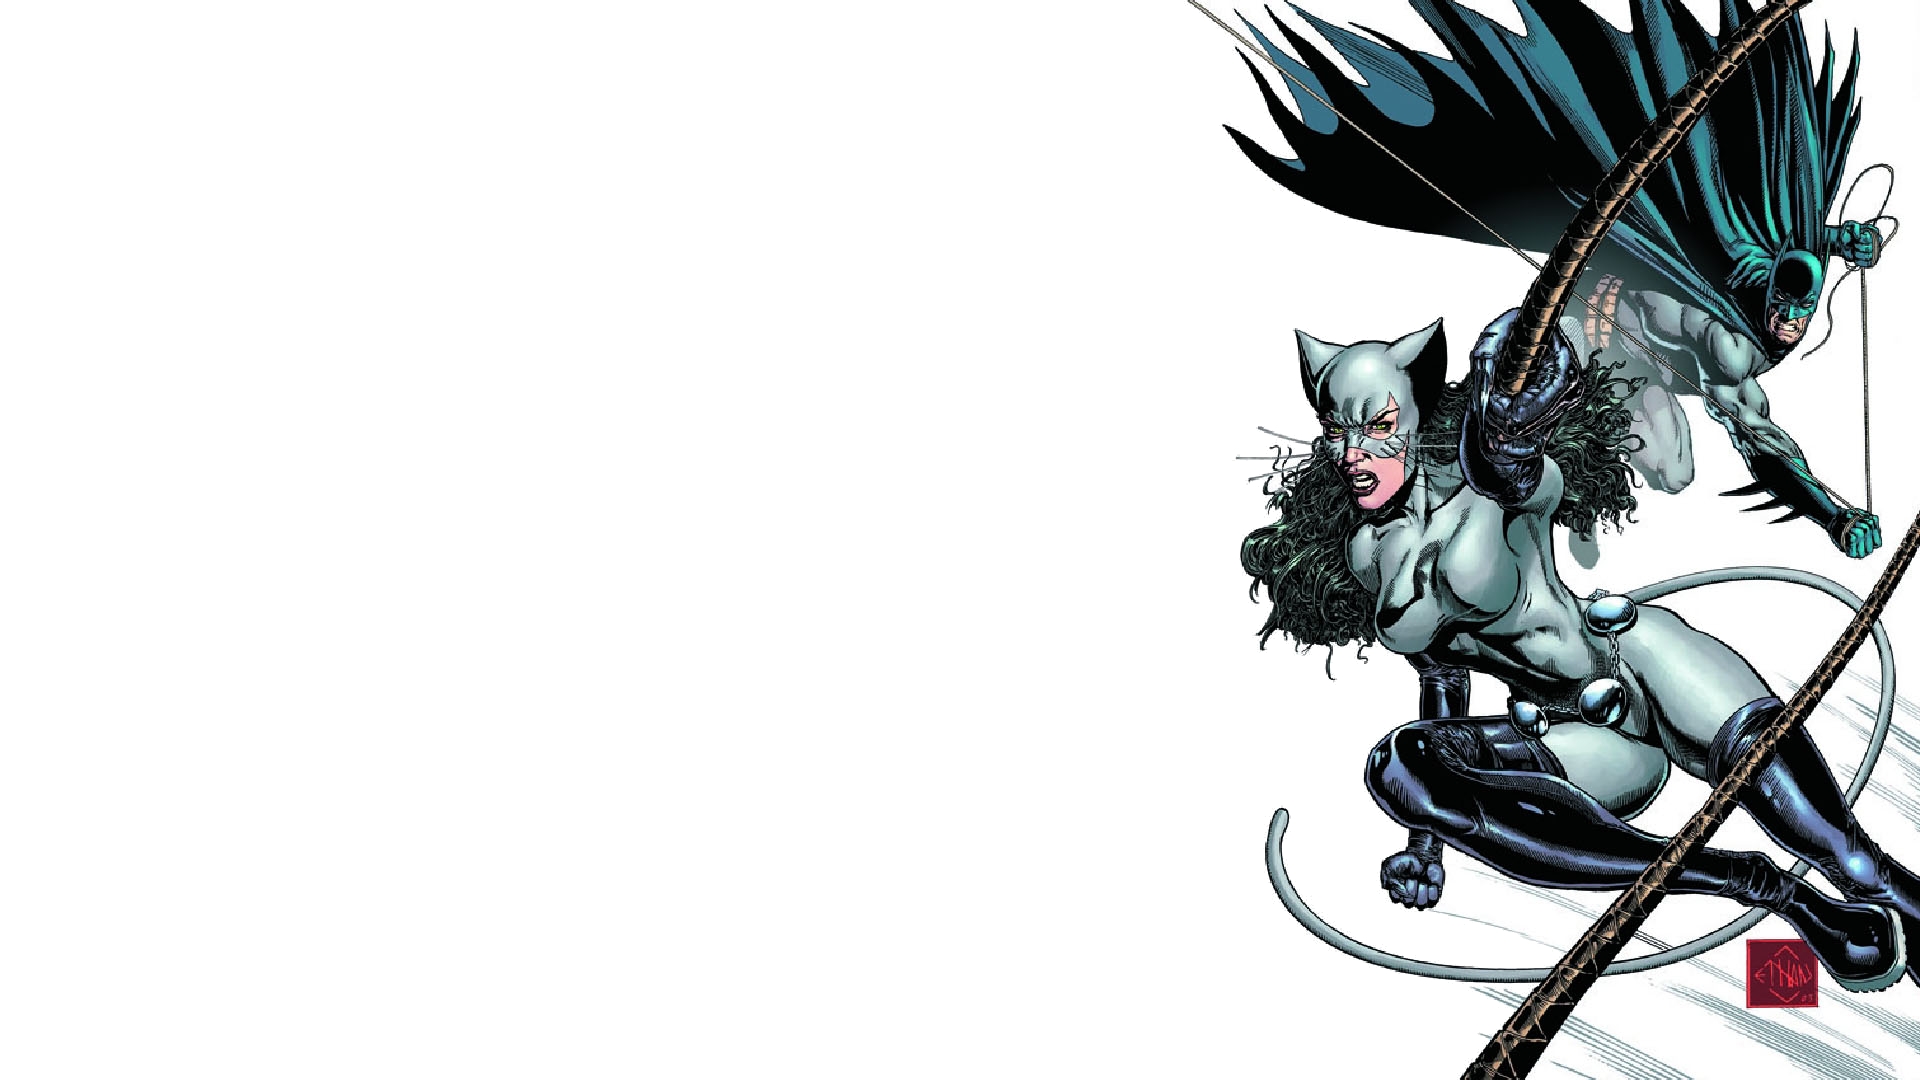 Скачать обои бесплатно Комиксы, Бэтмен, Комиксы Dc, Женщина Кошка, Бэтмен/женщина Кошка: Пулеметный След картинка на рабочий стол ПК